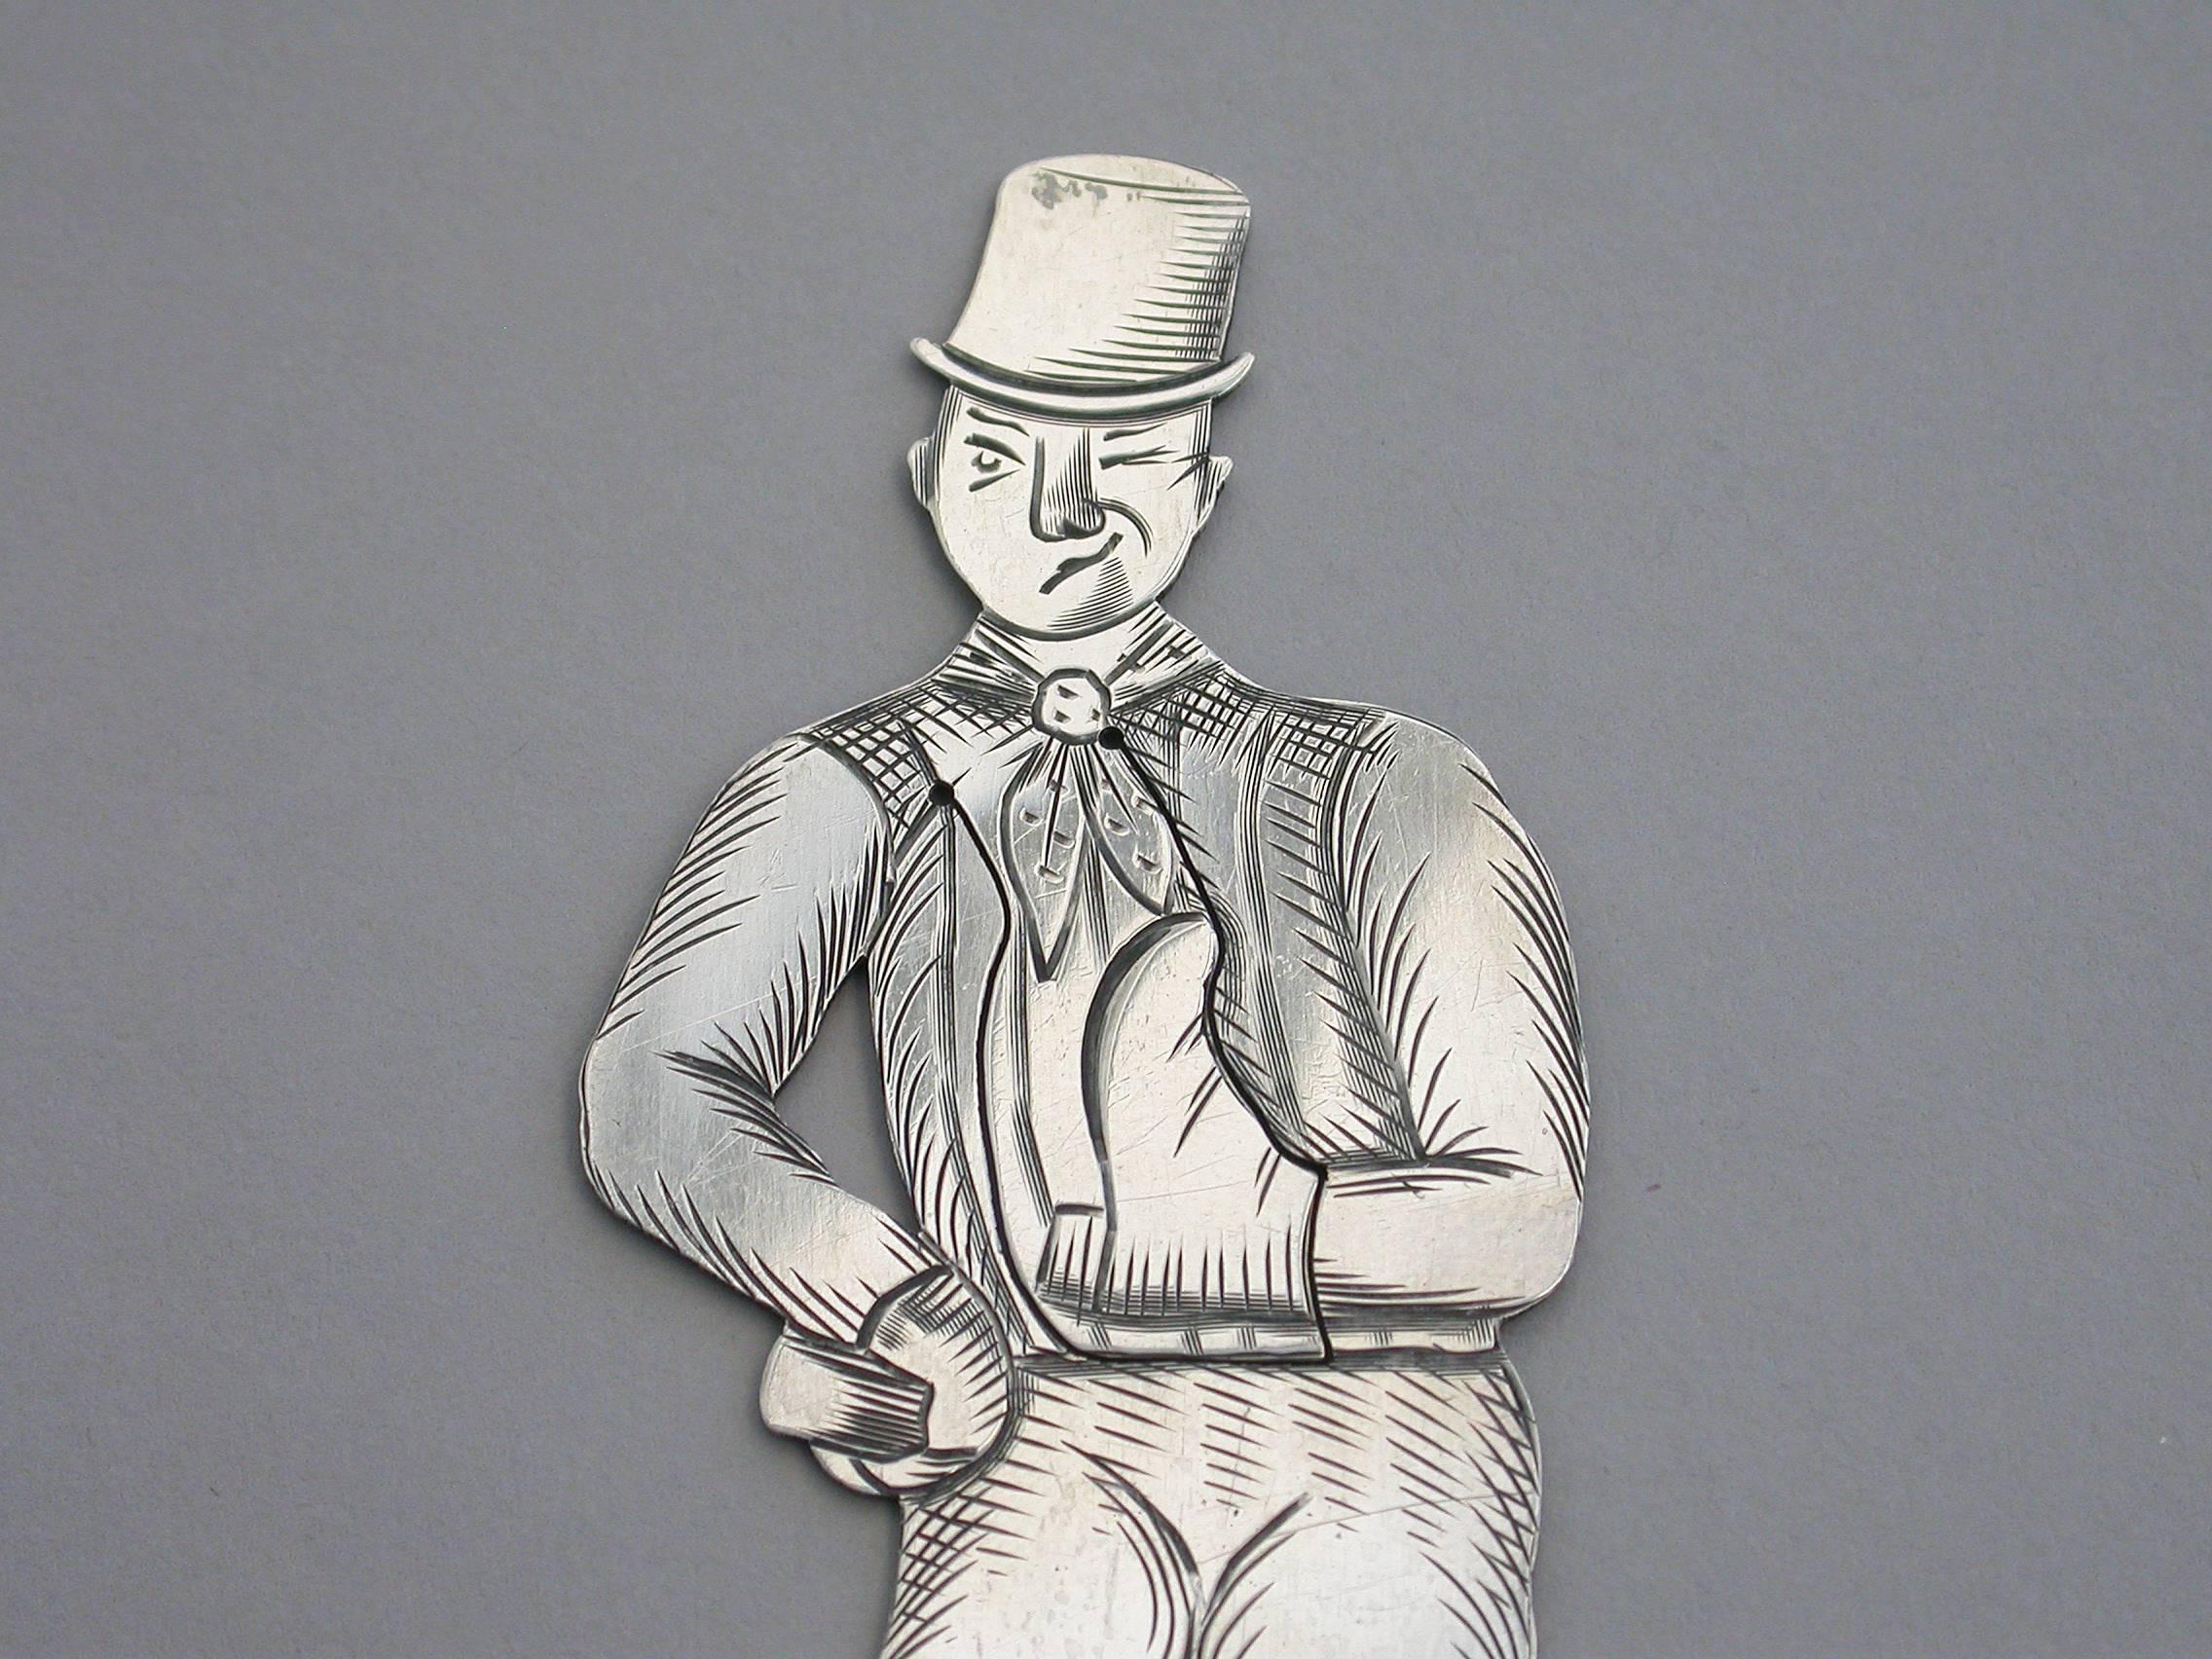 American Edwardian Novelty Silver Figural Bookmark 'Sam Weller' New York, 1901-1910 For Sale